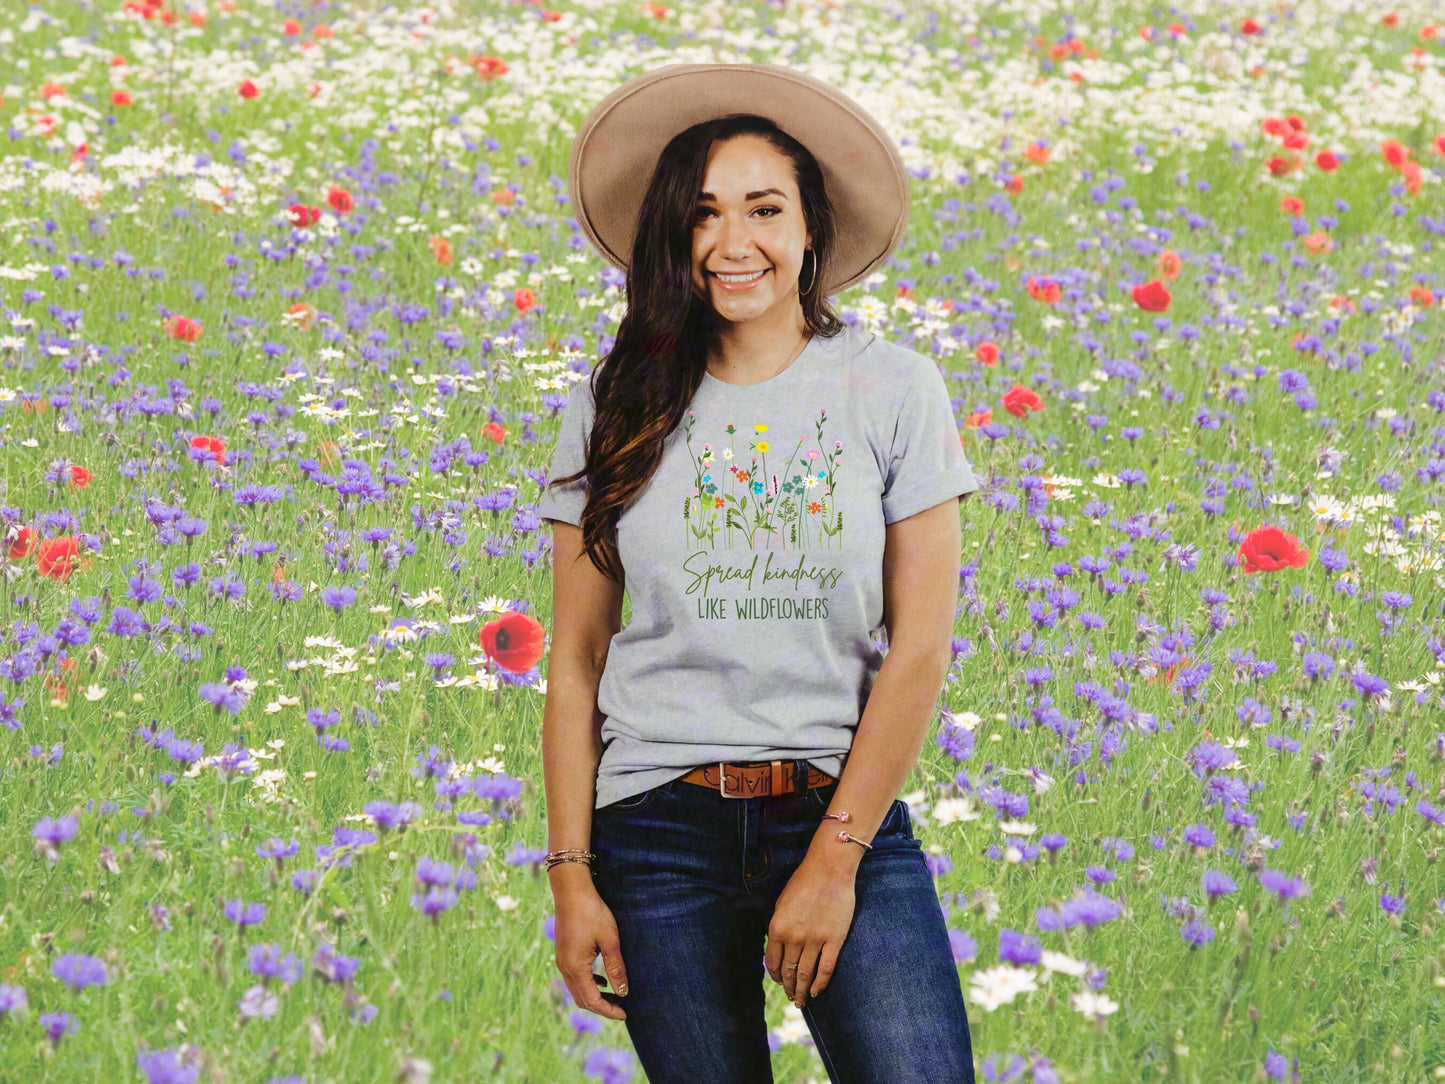 Stop Bullying Shirt, Spread Kindness Shirt, Wildflowers Shirt, Flower Shirt Wildflower Shirt for Women, Wildflowers Shirts, Floral Shirt